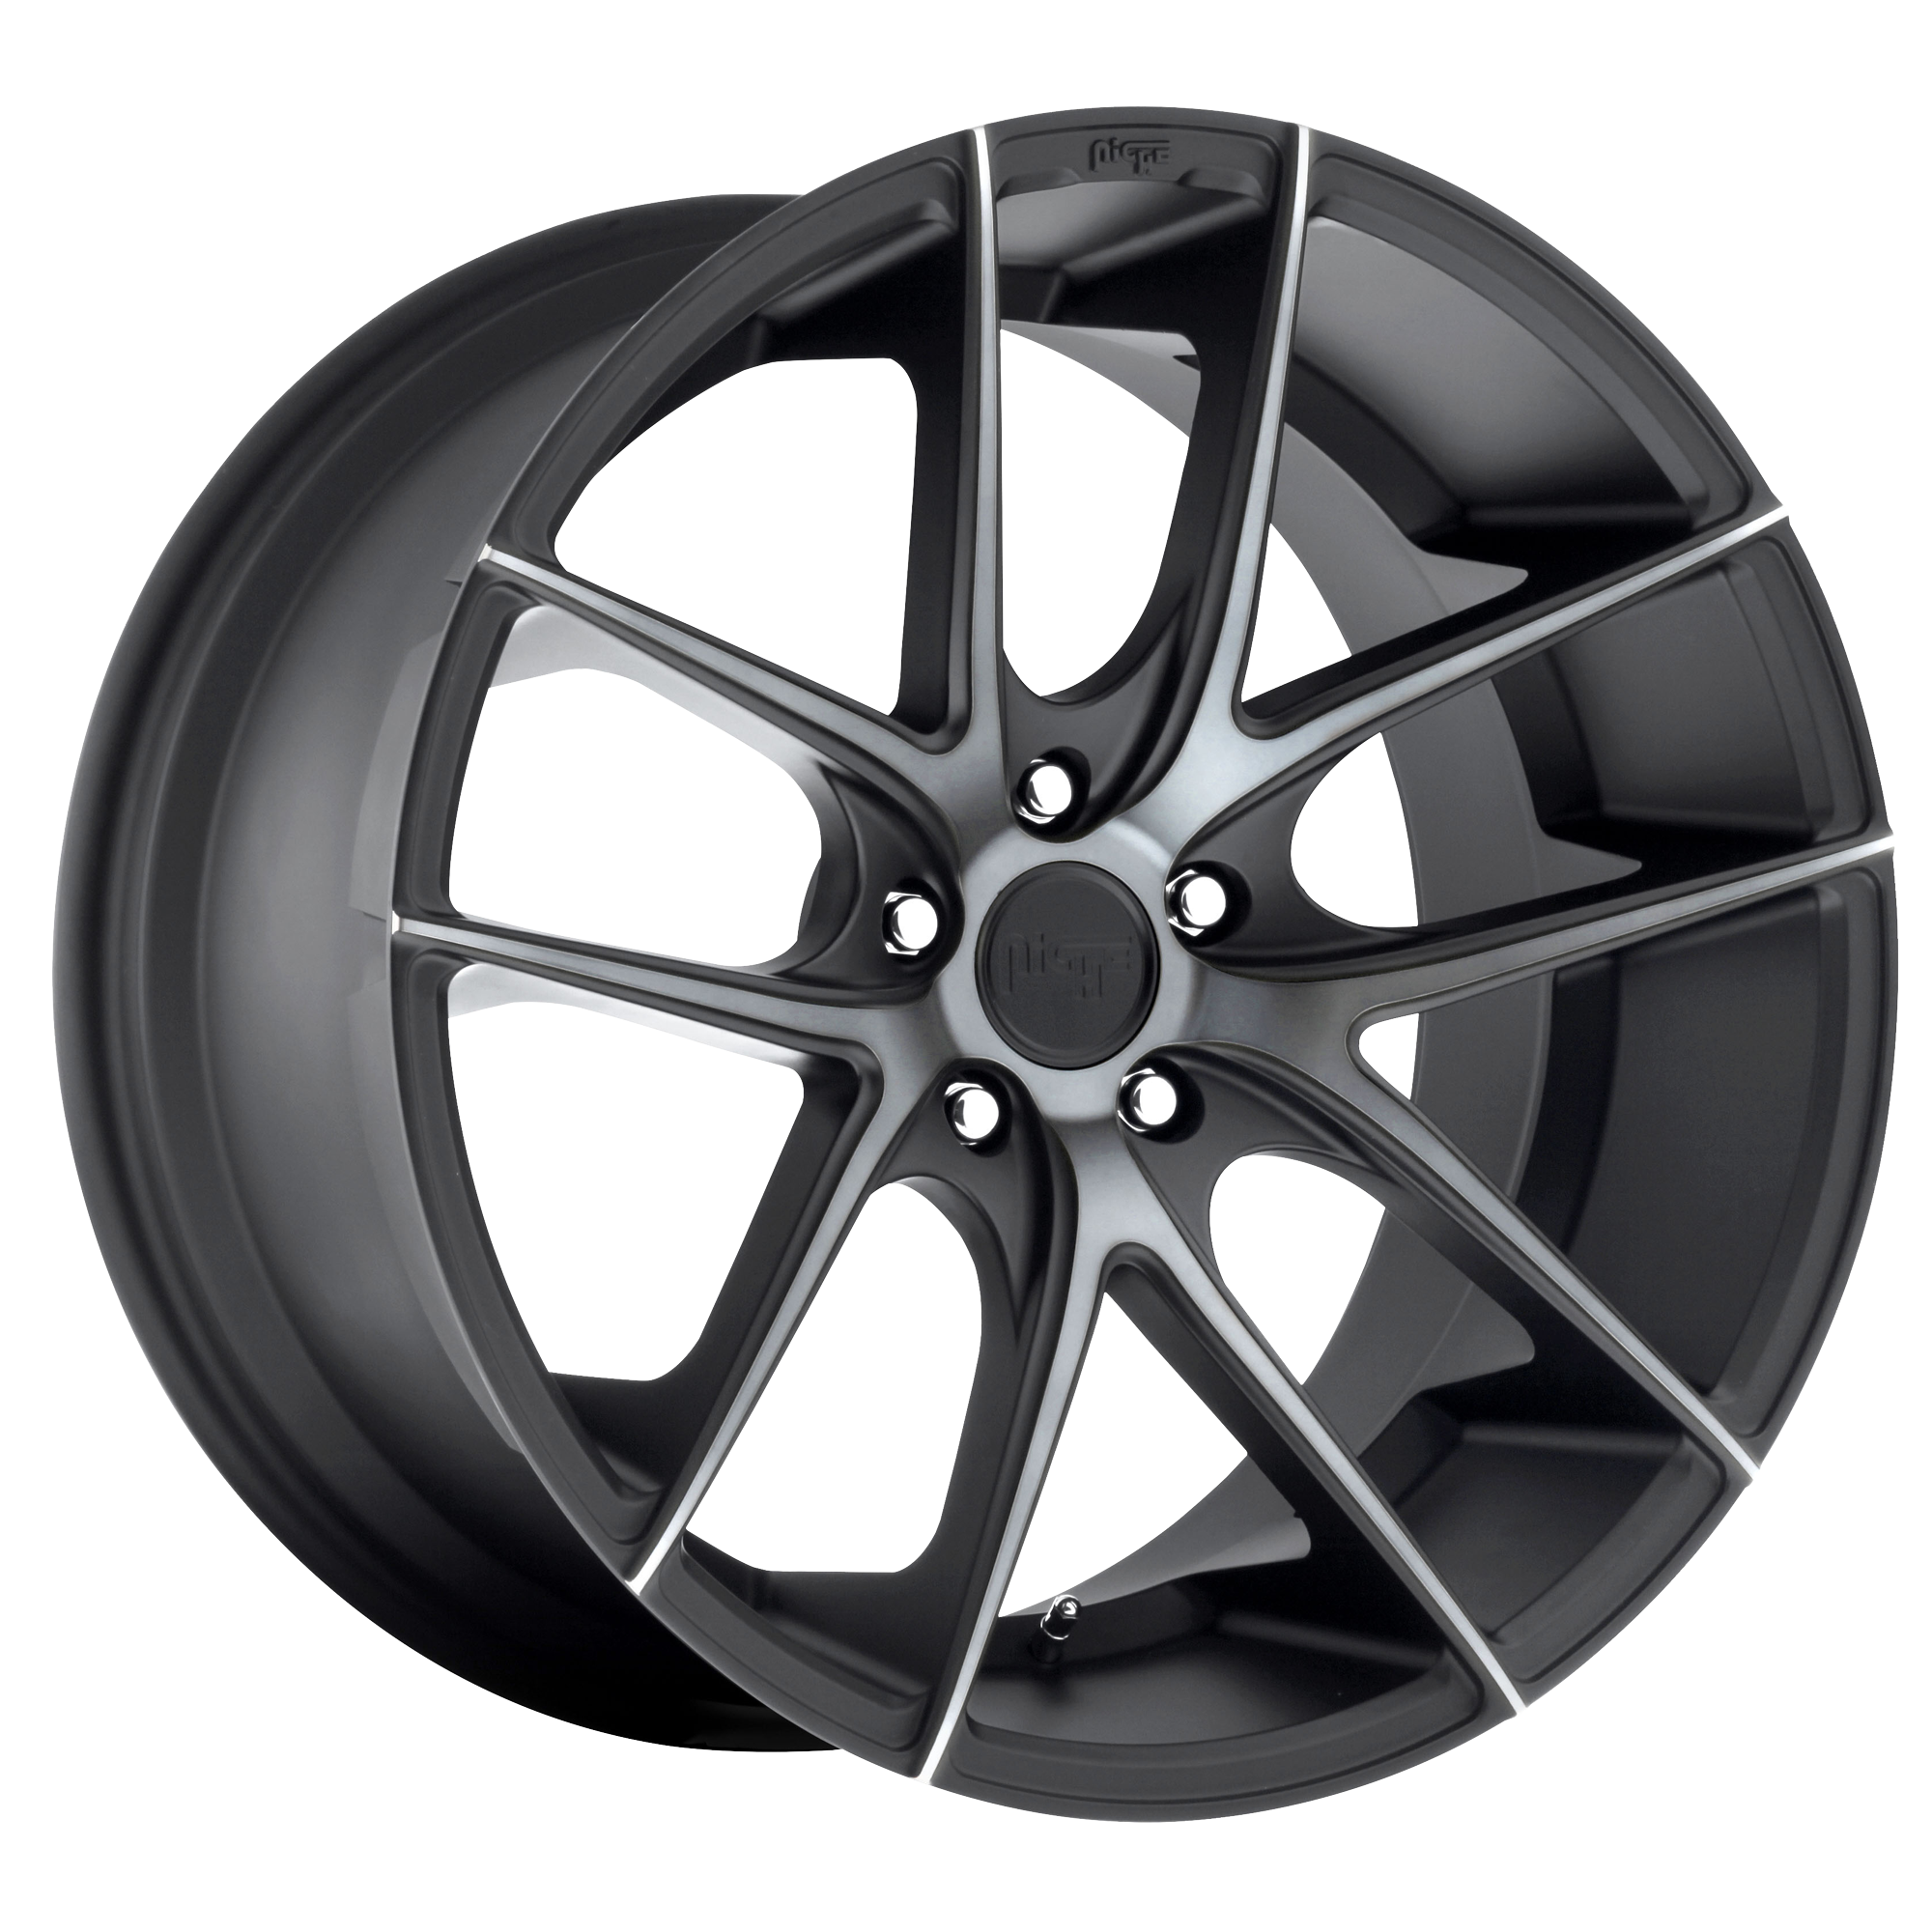 TARGA 18x8 5x120.00 MATTE BLACK DOUBLE DARK TINT (40 mm) - Tires and Engine Performance